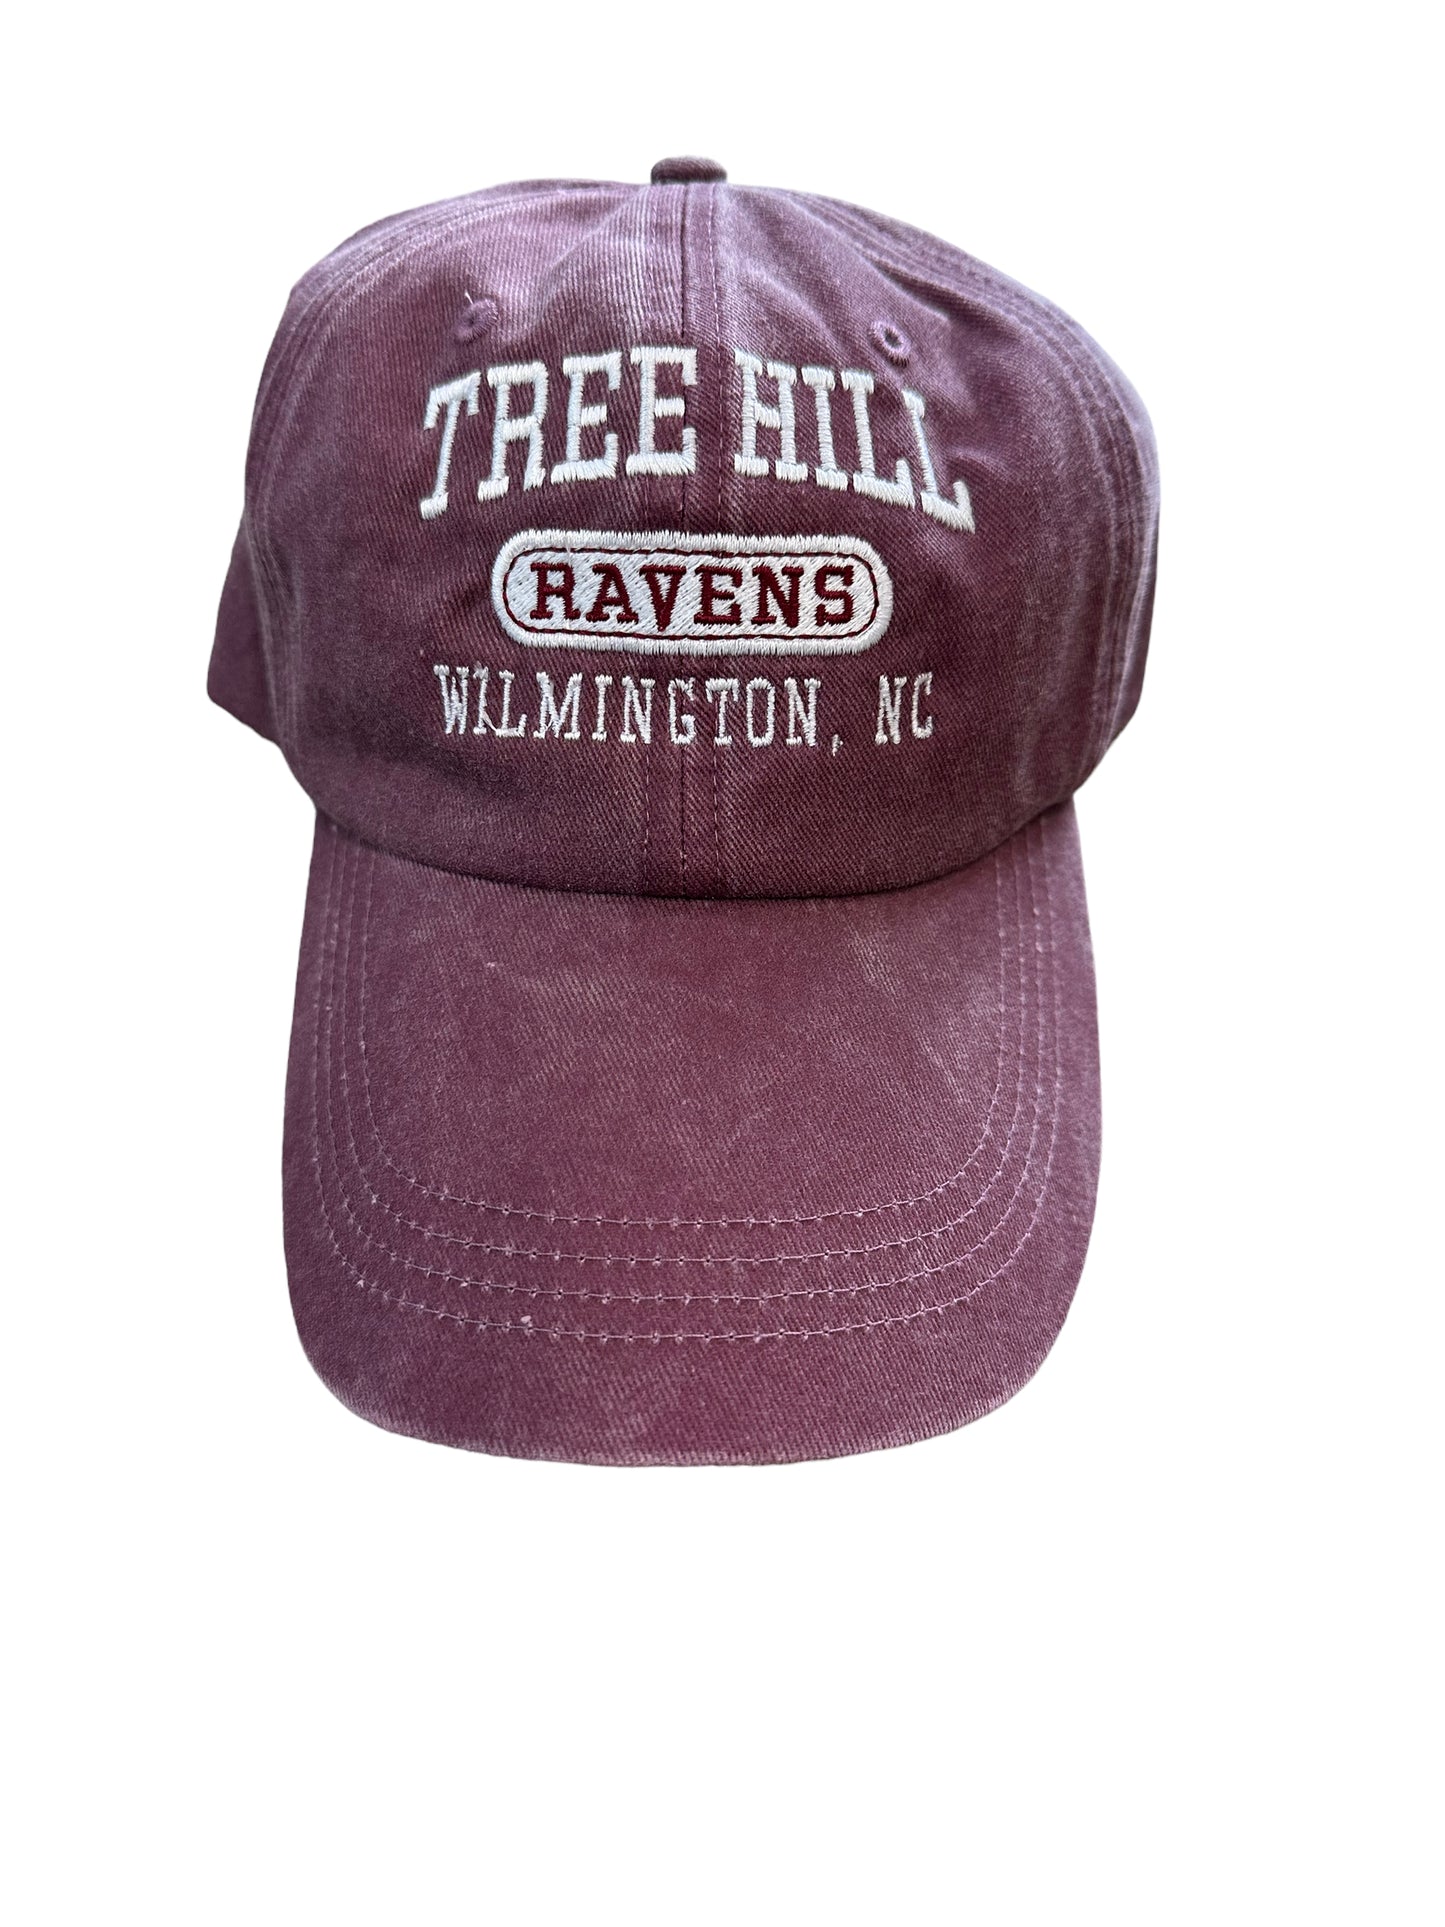 Tree Hill Raven 3 Tier  - Hat - Brick (White Thread )